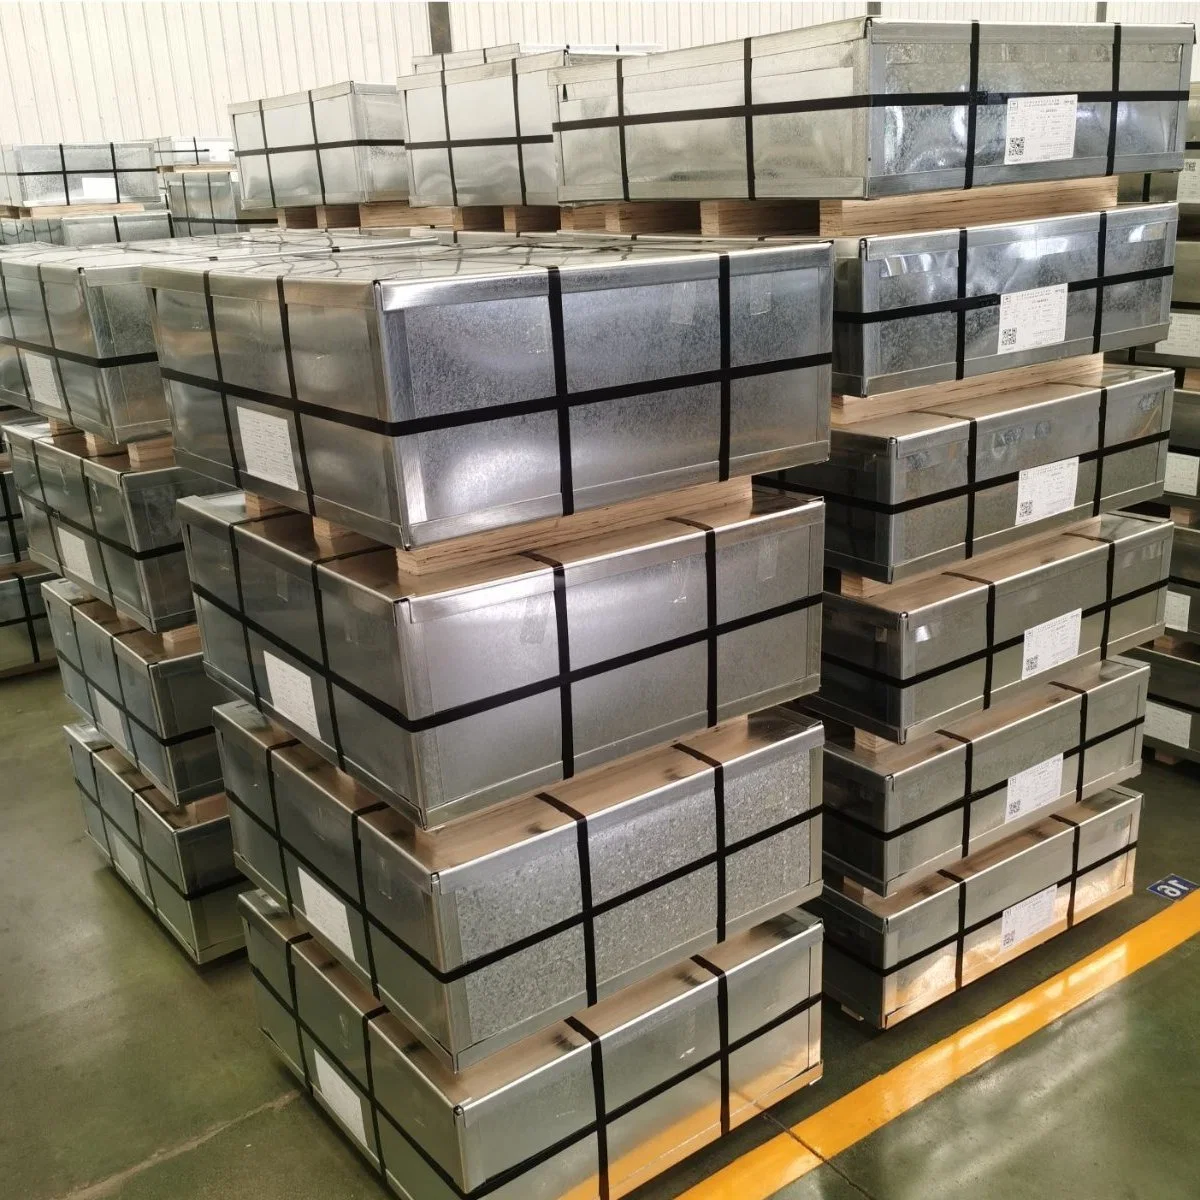 Prime TFS Hersteller Customized Industrial Can Kaltwalzen Tin Free Stahlspule leicht offenes Ende Verwendung SOT